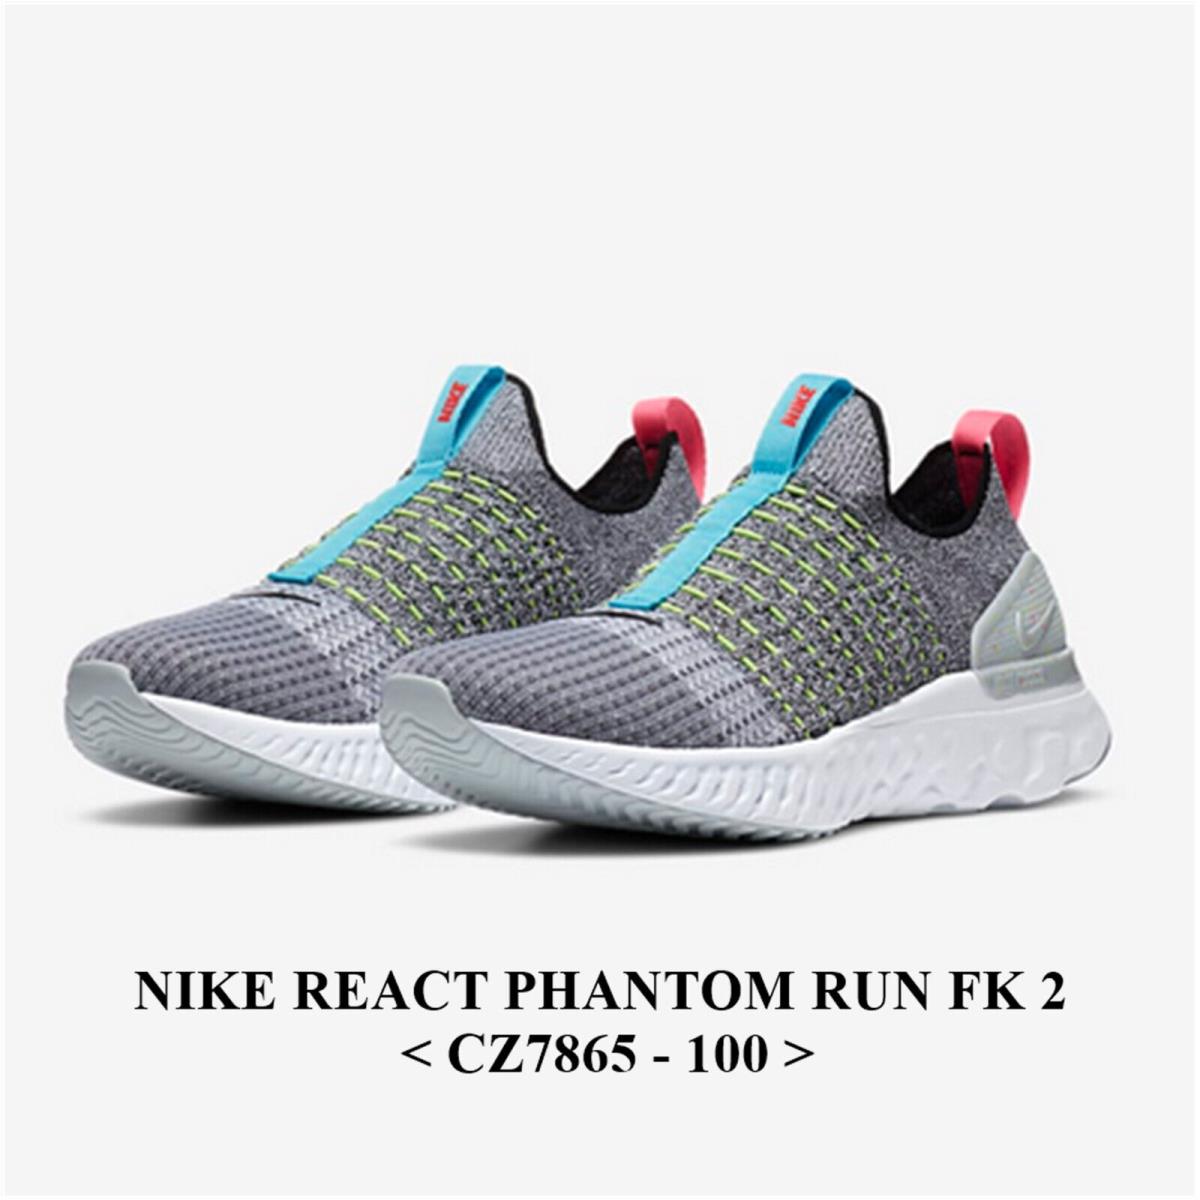 Nike React Phantom Run FK 2 CZ7865 - 100 Men`s Running Shoes - Gray